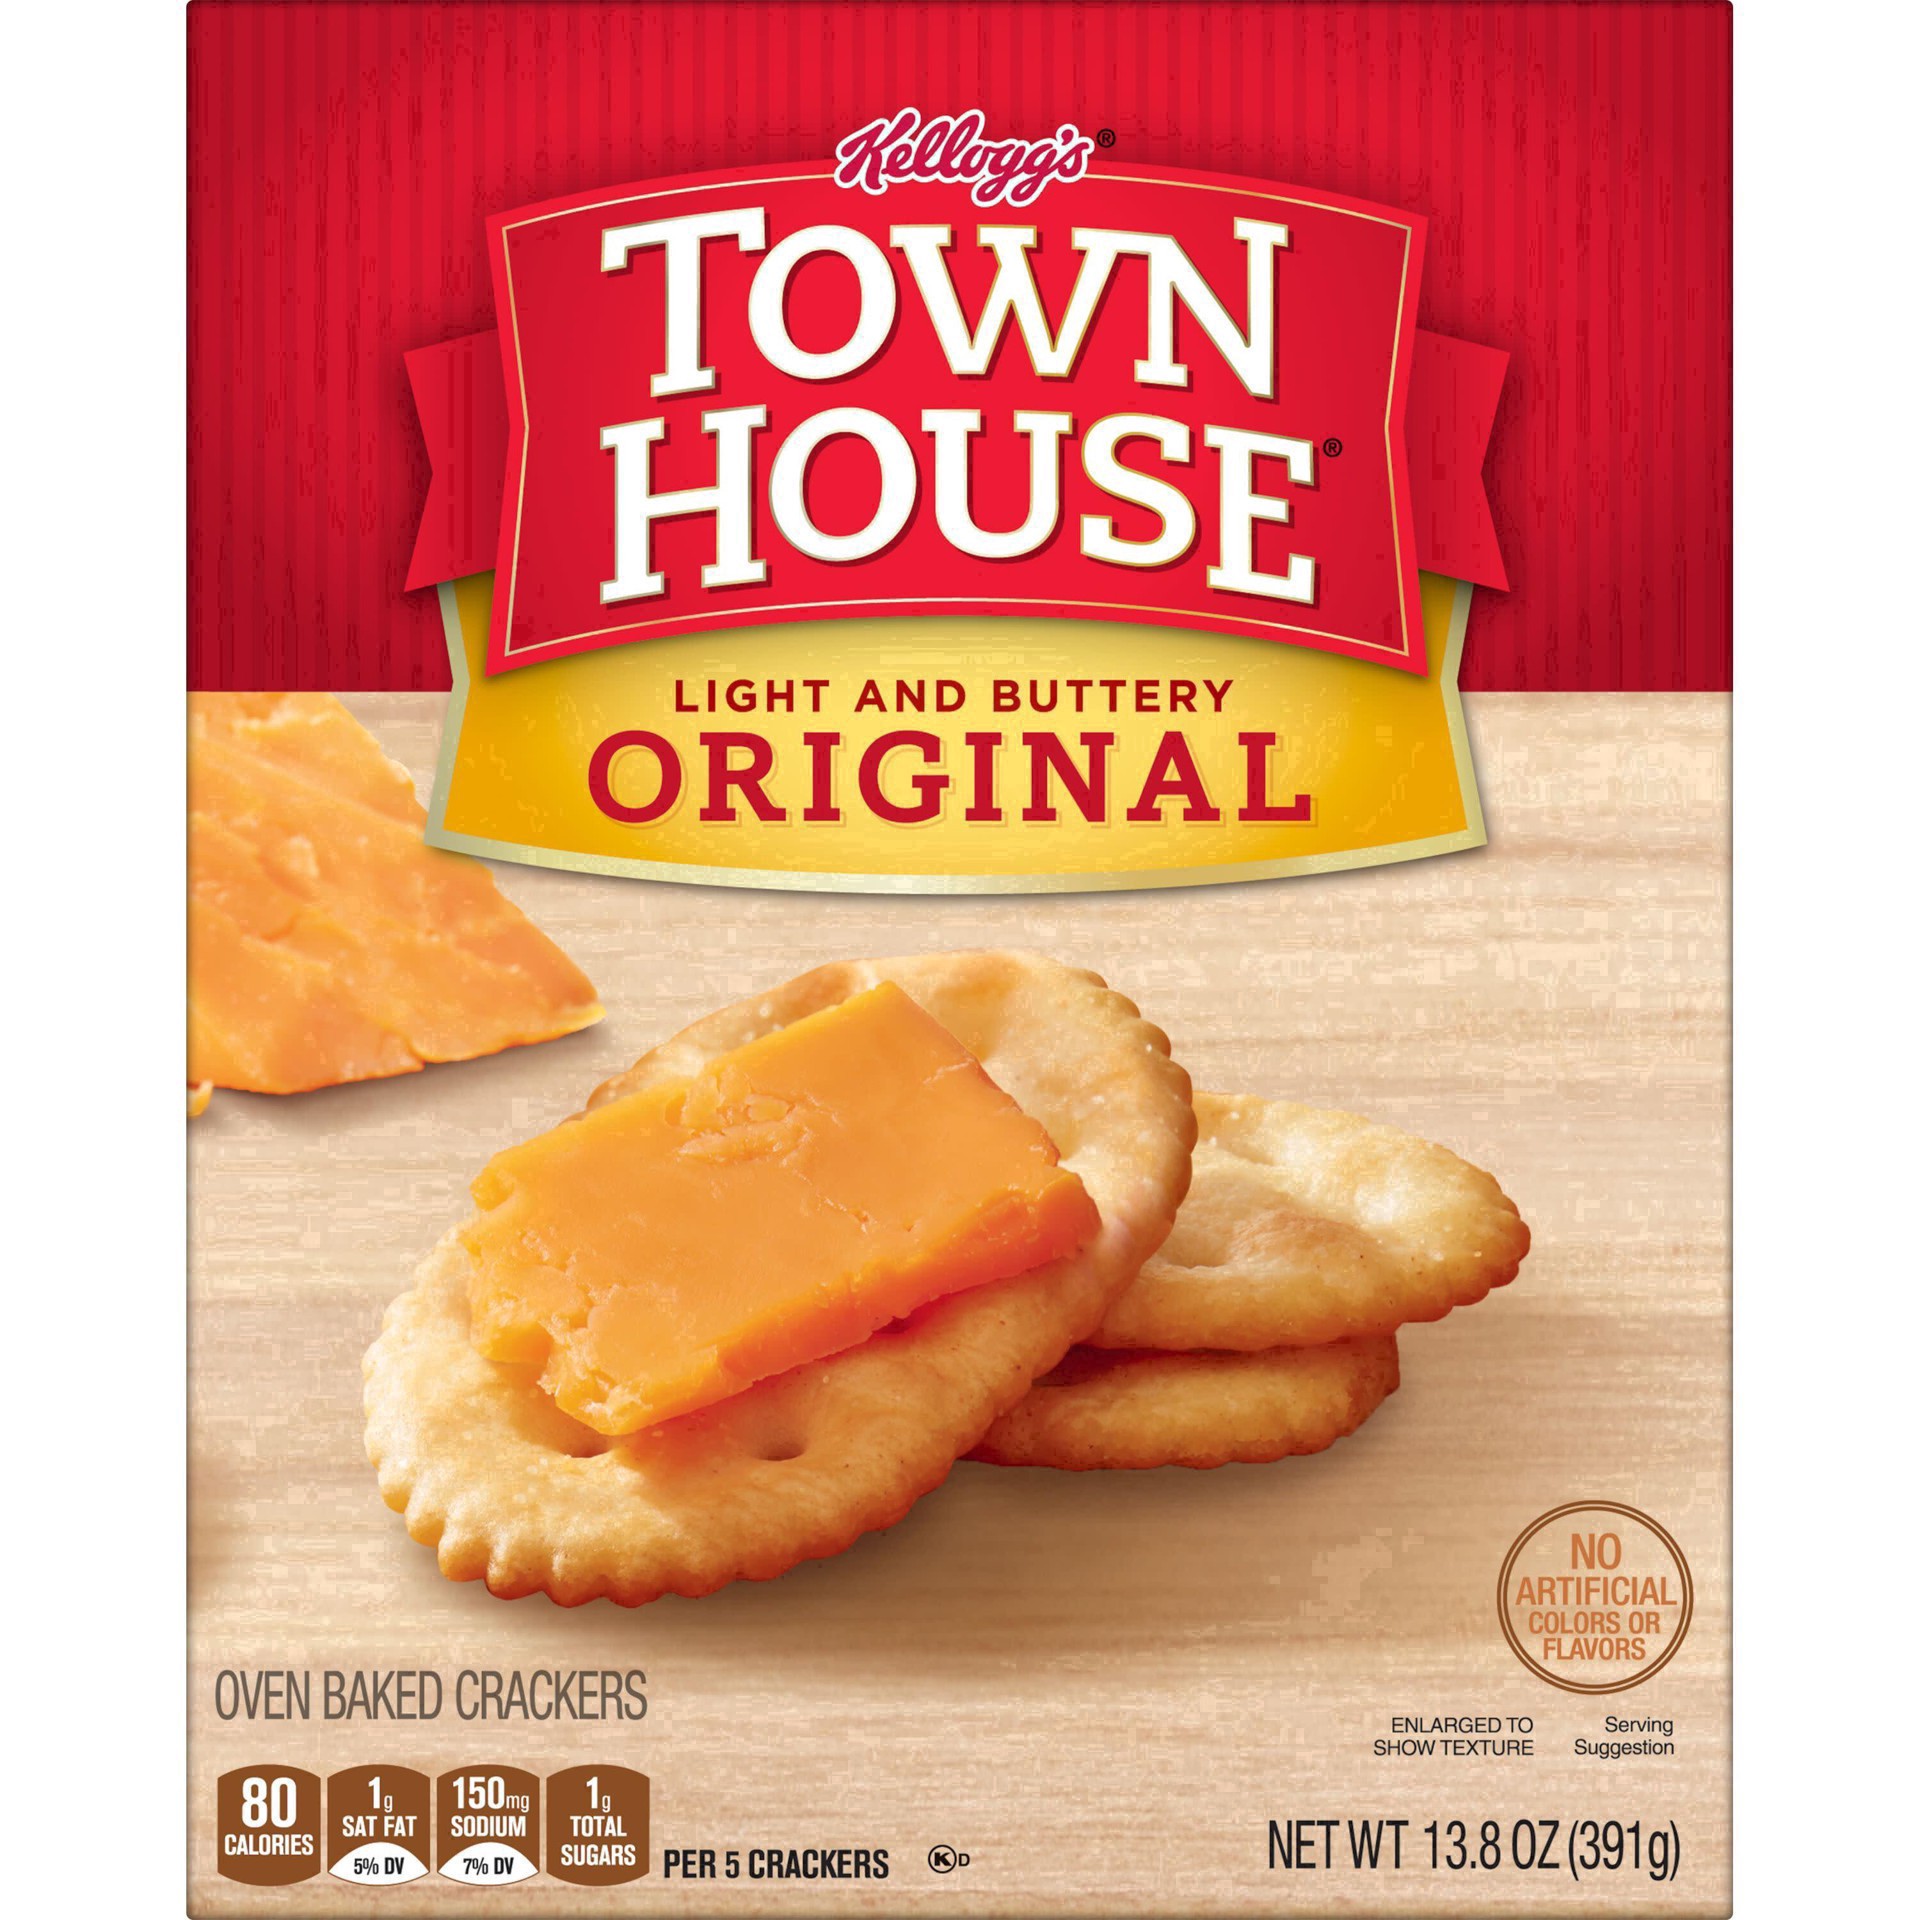 slide 15 of 101, Town House Kellogg's Town House Original Snack Crackers - 13.8oz, 13.8 oz